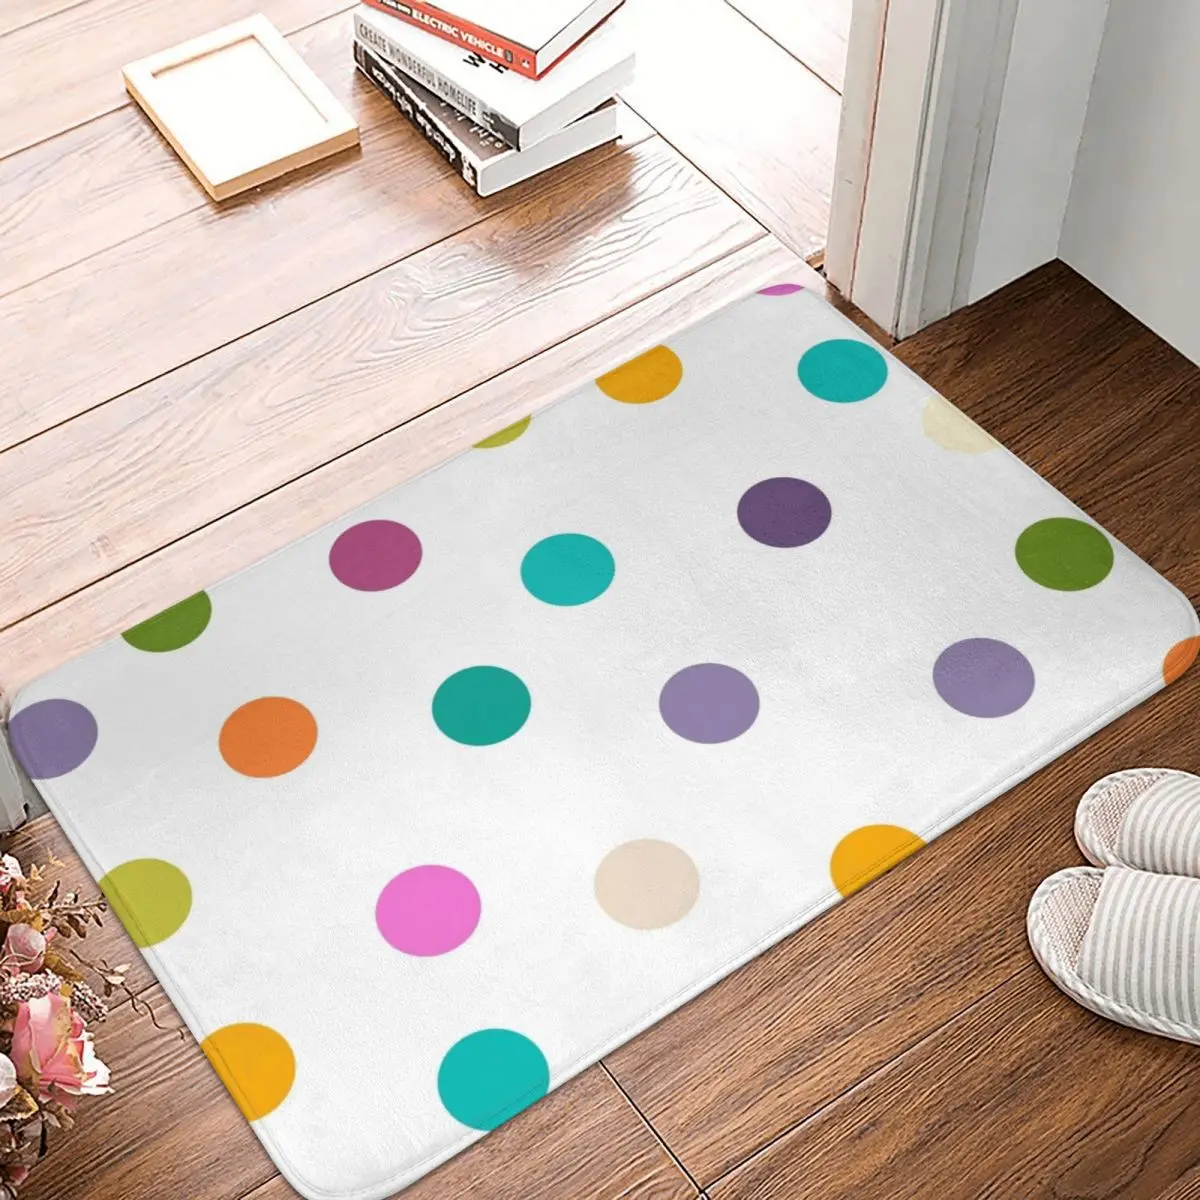 

Colourful Dots Large Doormat Carpet Mat Rug Polyester PVC Non-Slip Floor Decor Bath Bathroom Kitchen Living Room 40x60